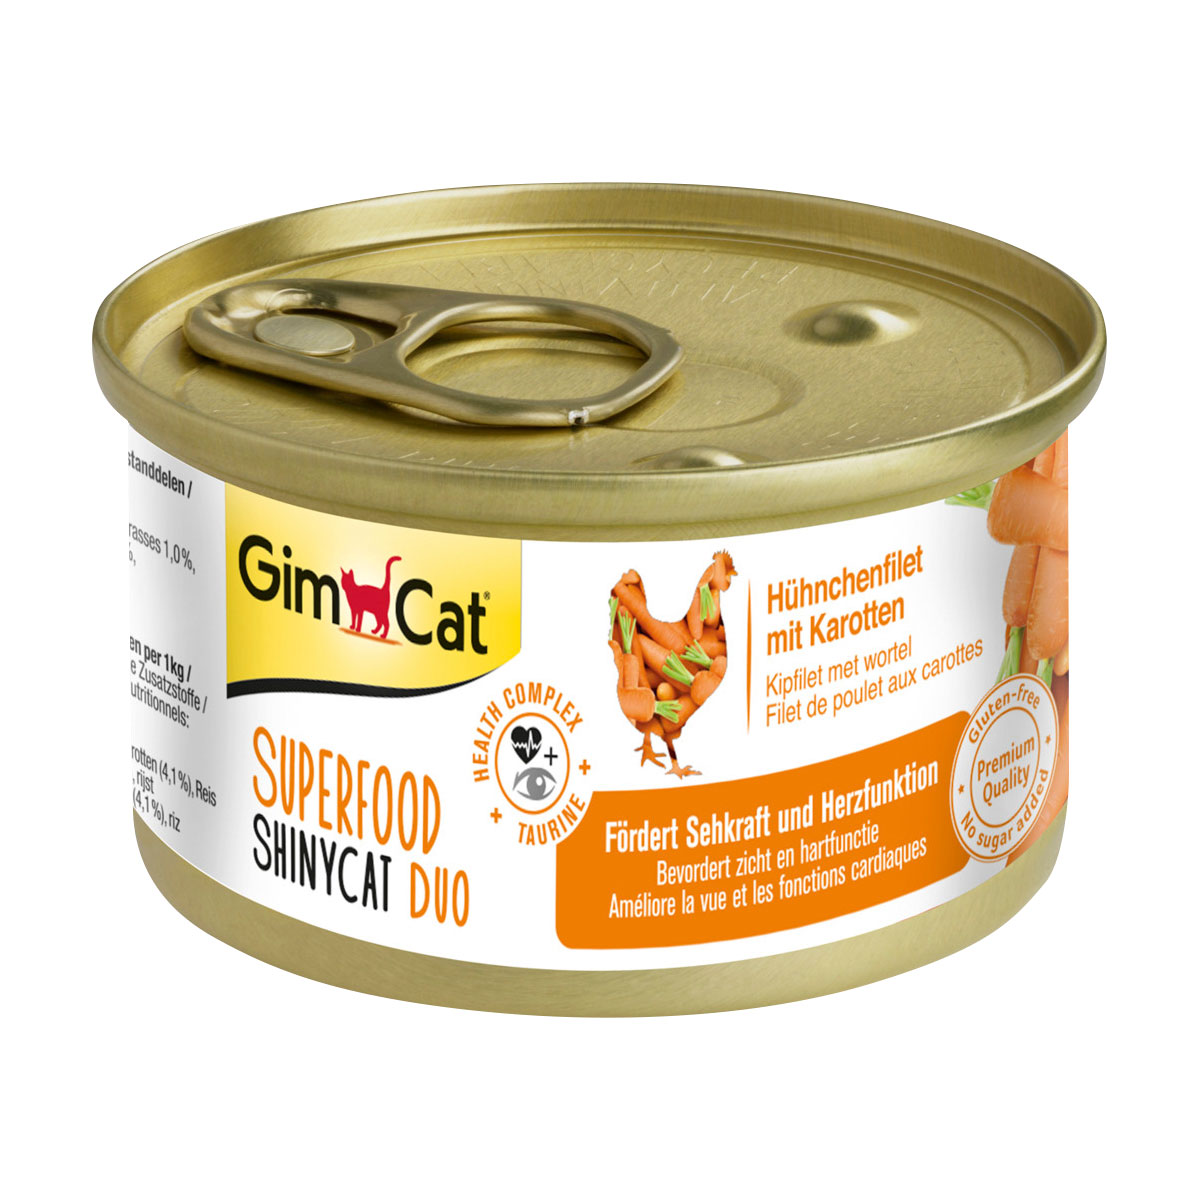 GimCat Superfood ShinyCat Duo Hühnchenfilet mit Karotten 24x70g von Gimcat